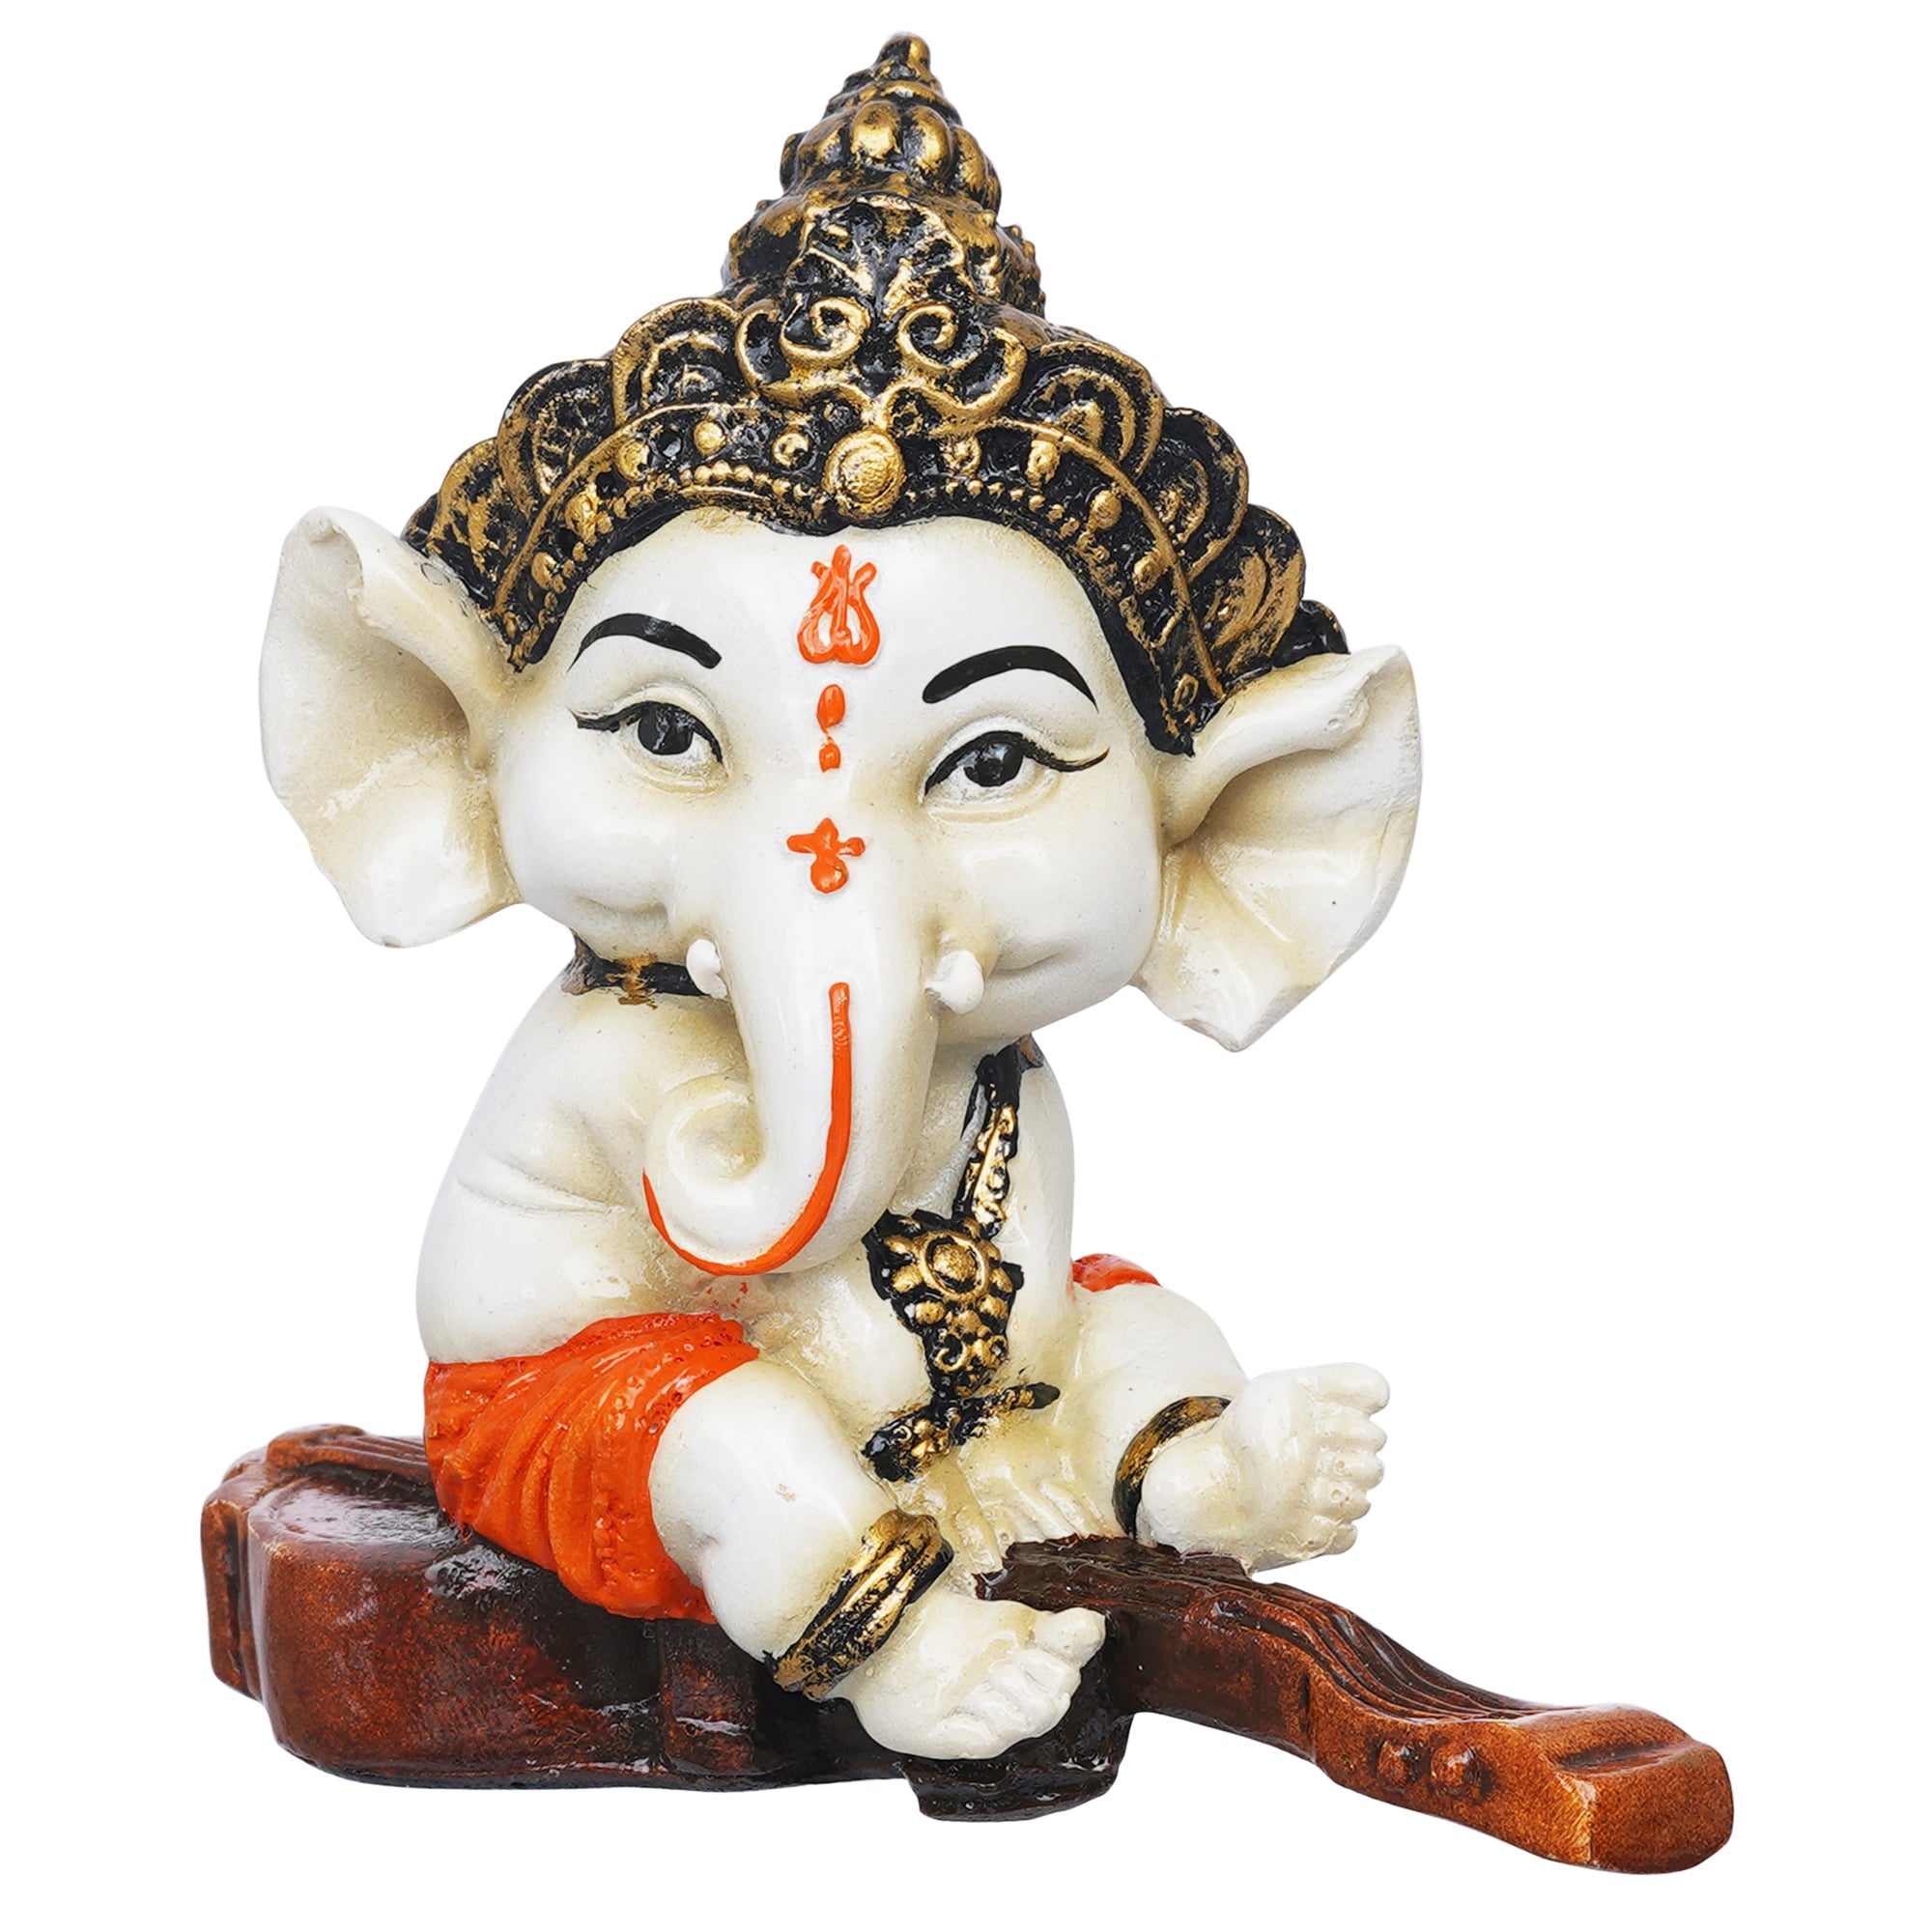 eCraftIndia Orange Polyresin Decorated Lord Ganesha Idol Sitting on Veena Musical Instrument 2